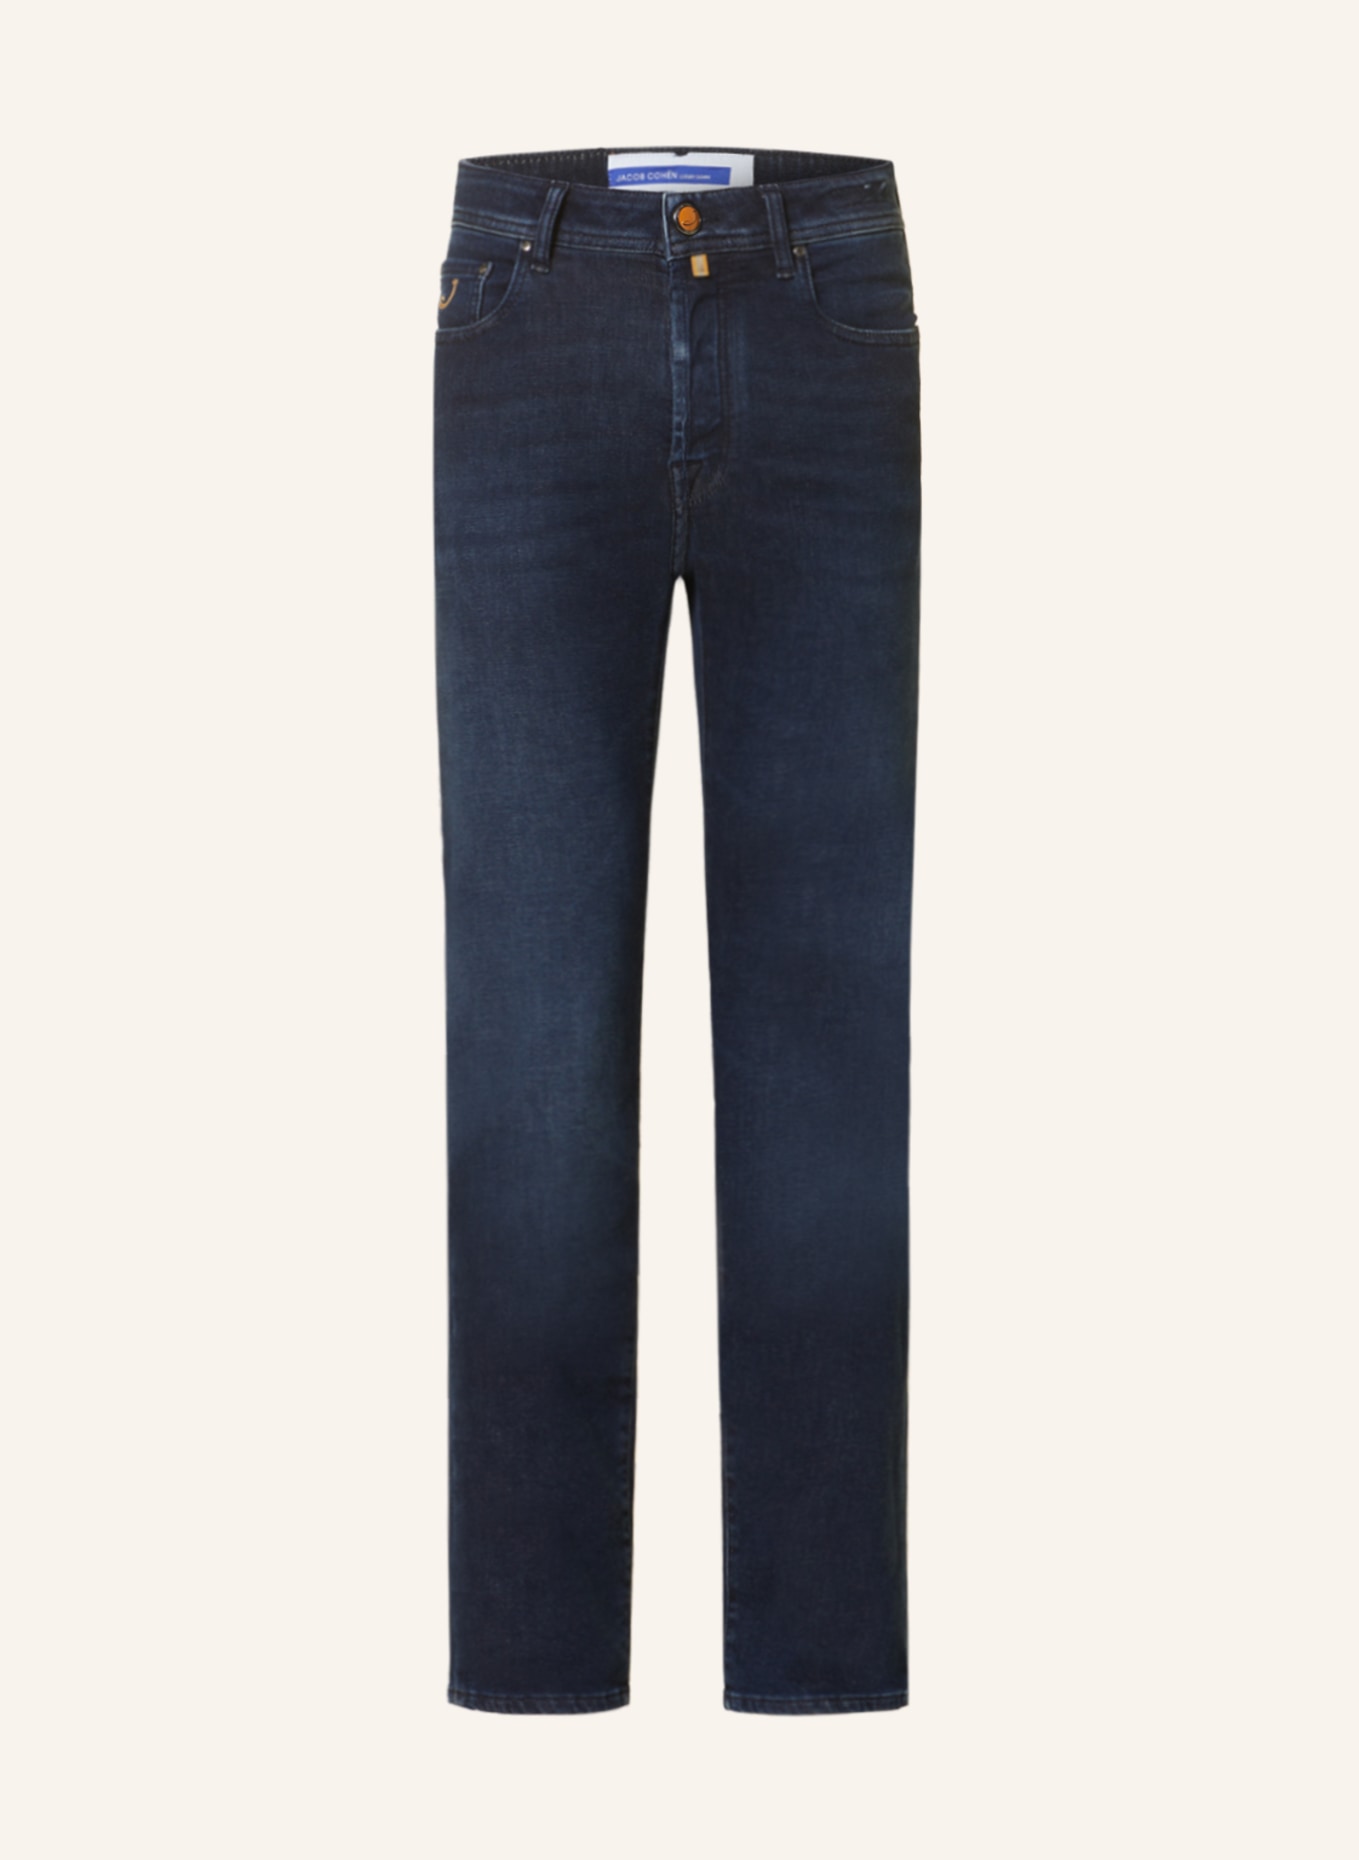 JACOB COHEN Jeans BARD Slim Fit, Farbe: 562D Dark Blue (Bild 1)